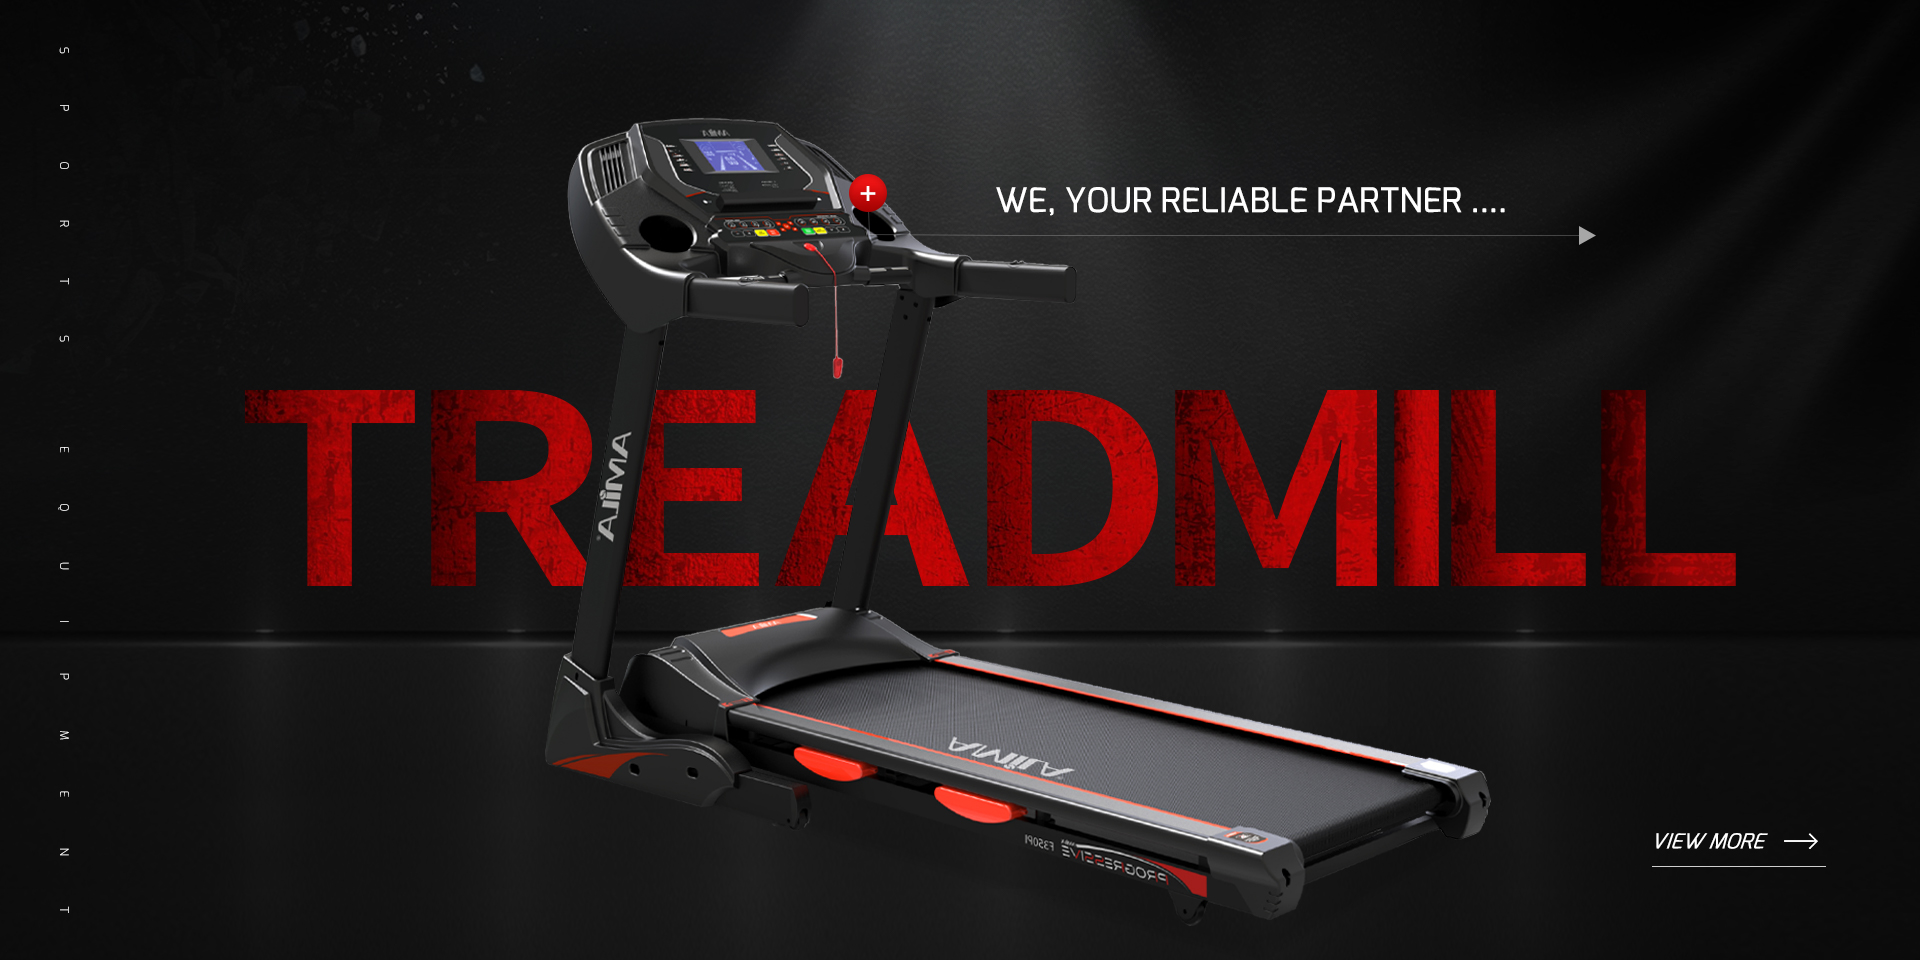 Treadmill, Exercise Bike, Rowing Machine - Kmaster